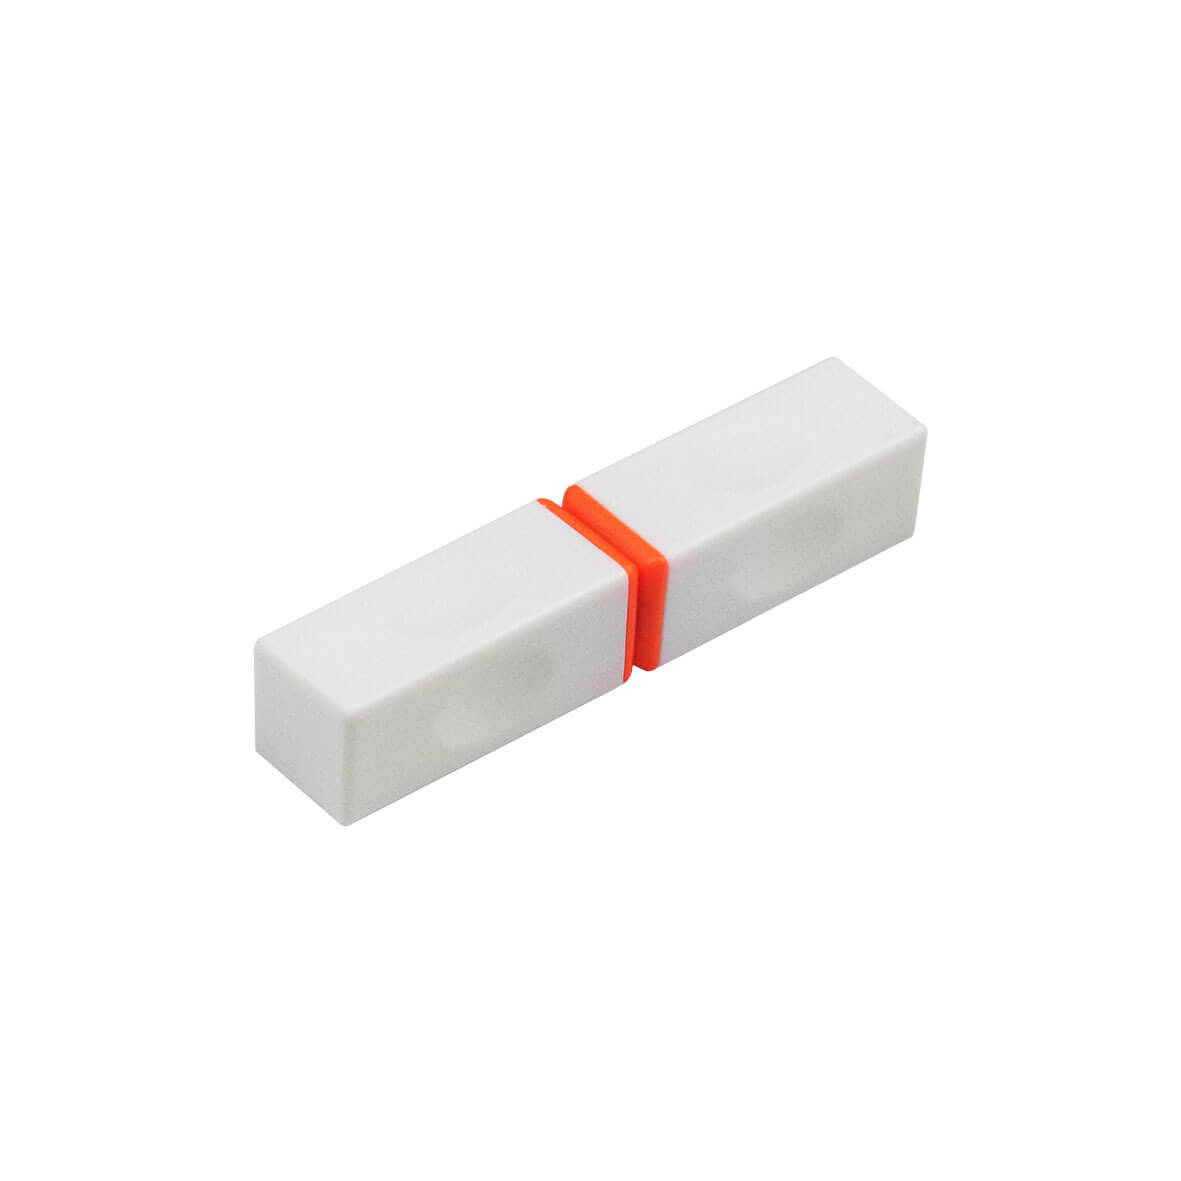 White Magnetic Fingertip Brick Toy